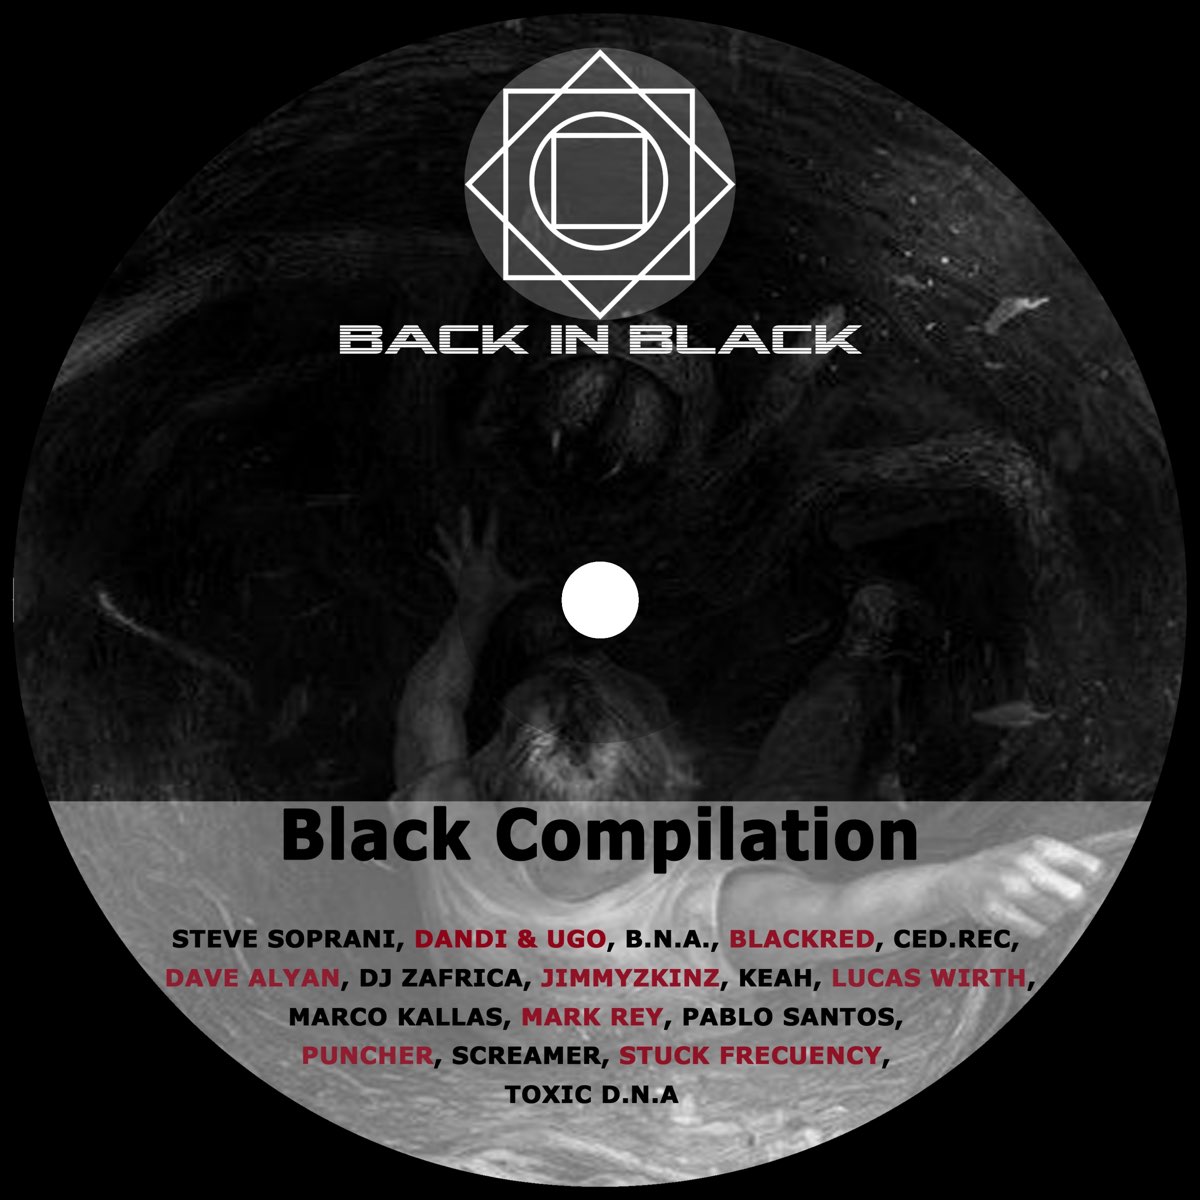 amanda reddaway recommends Black On Black Compilation